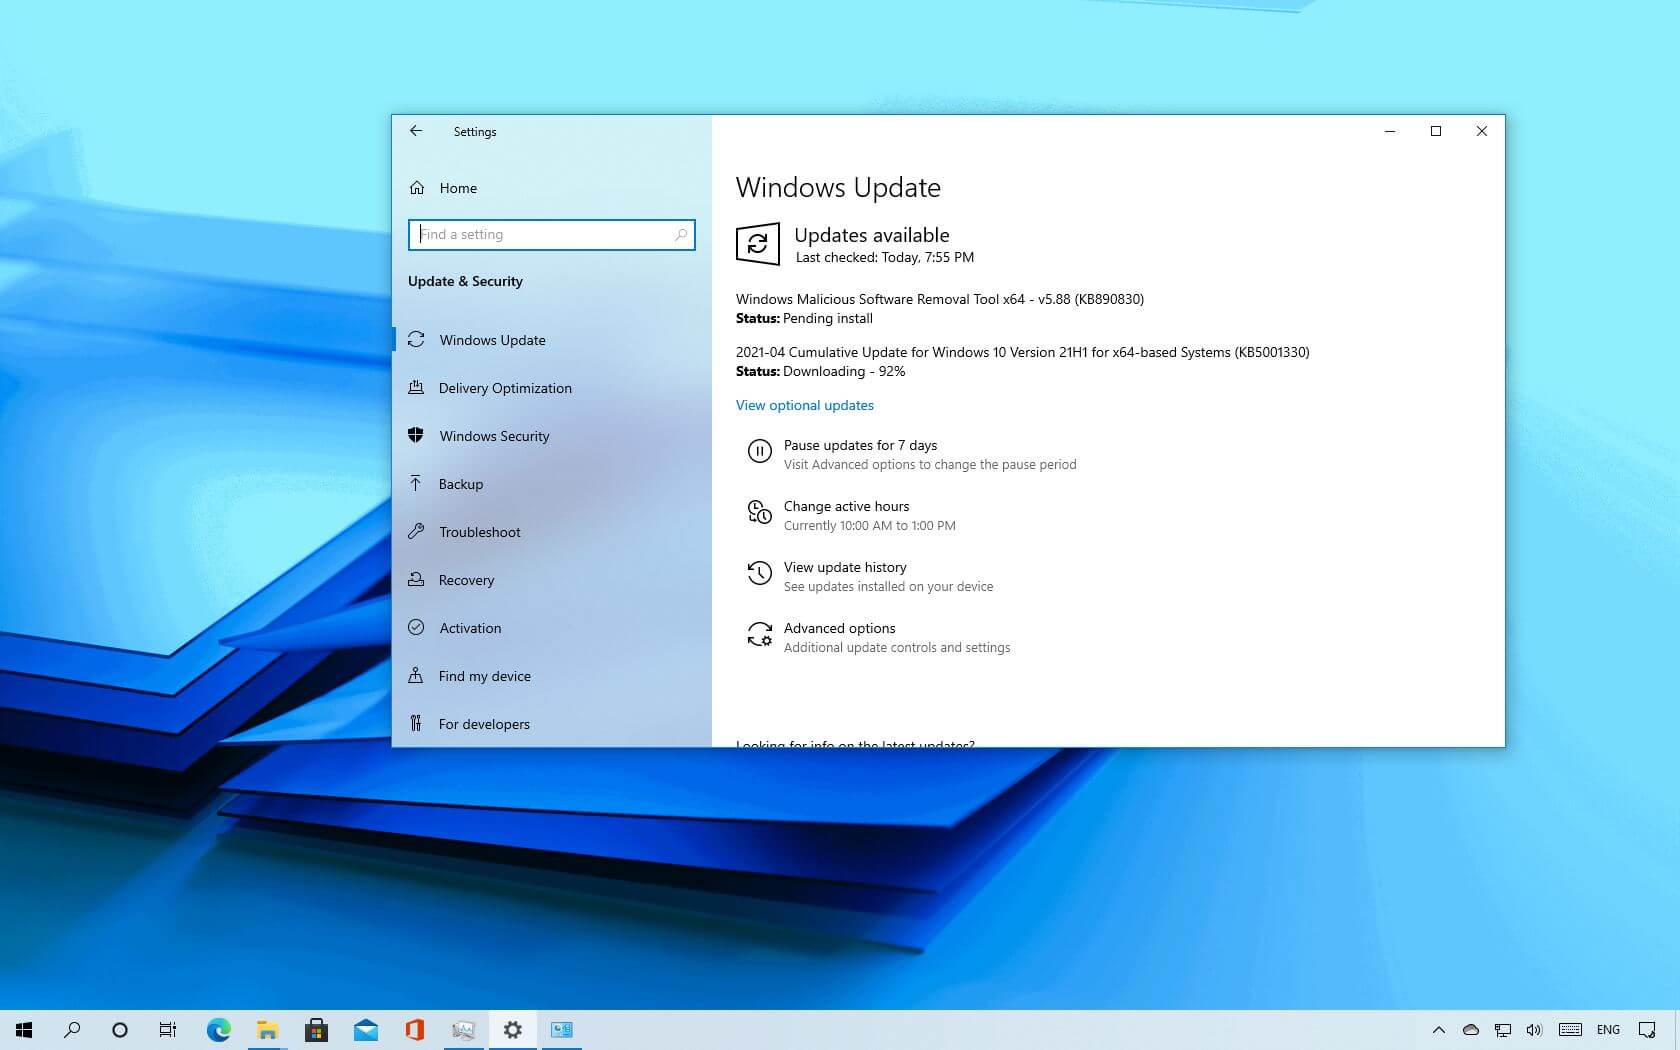 Windows 10 update KB5001330